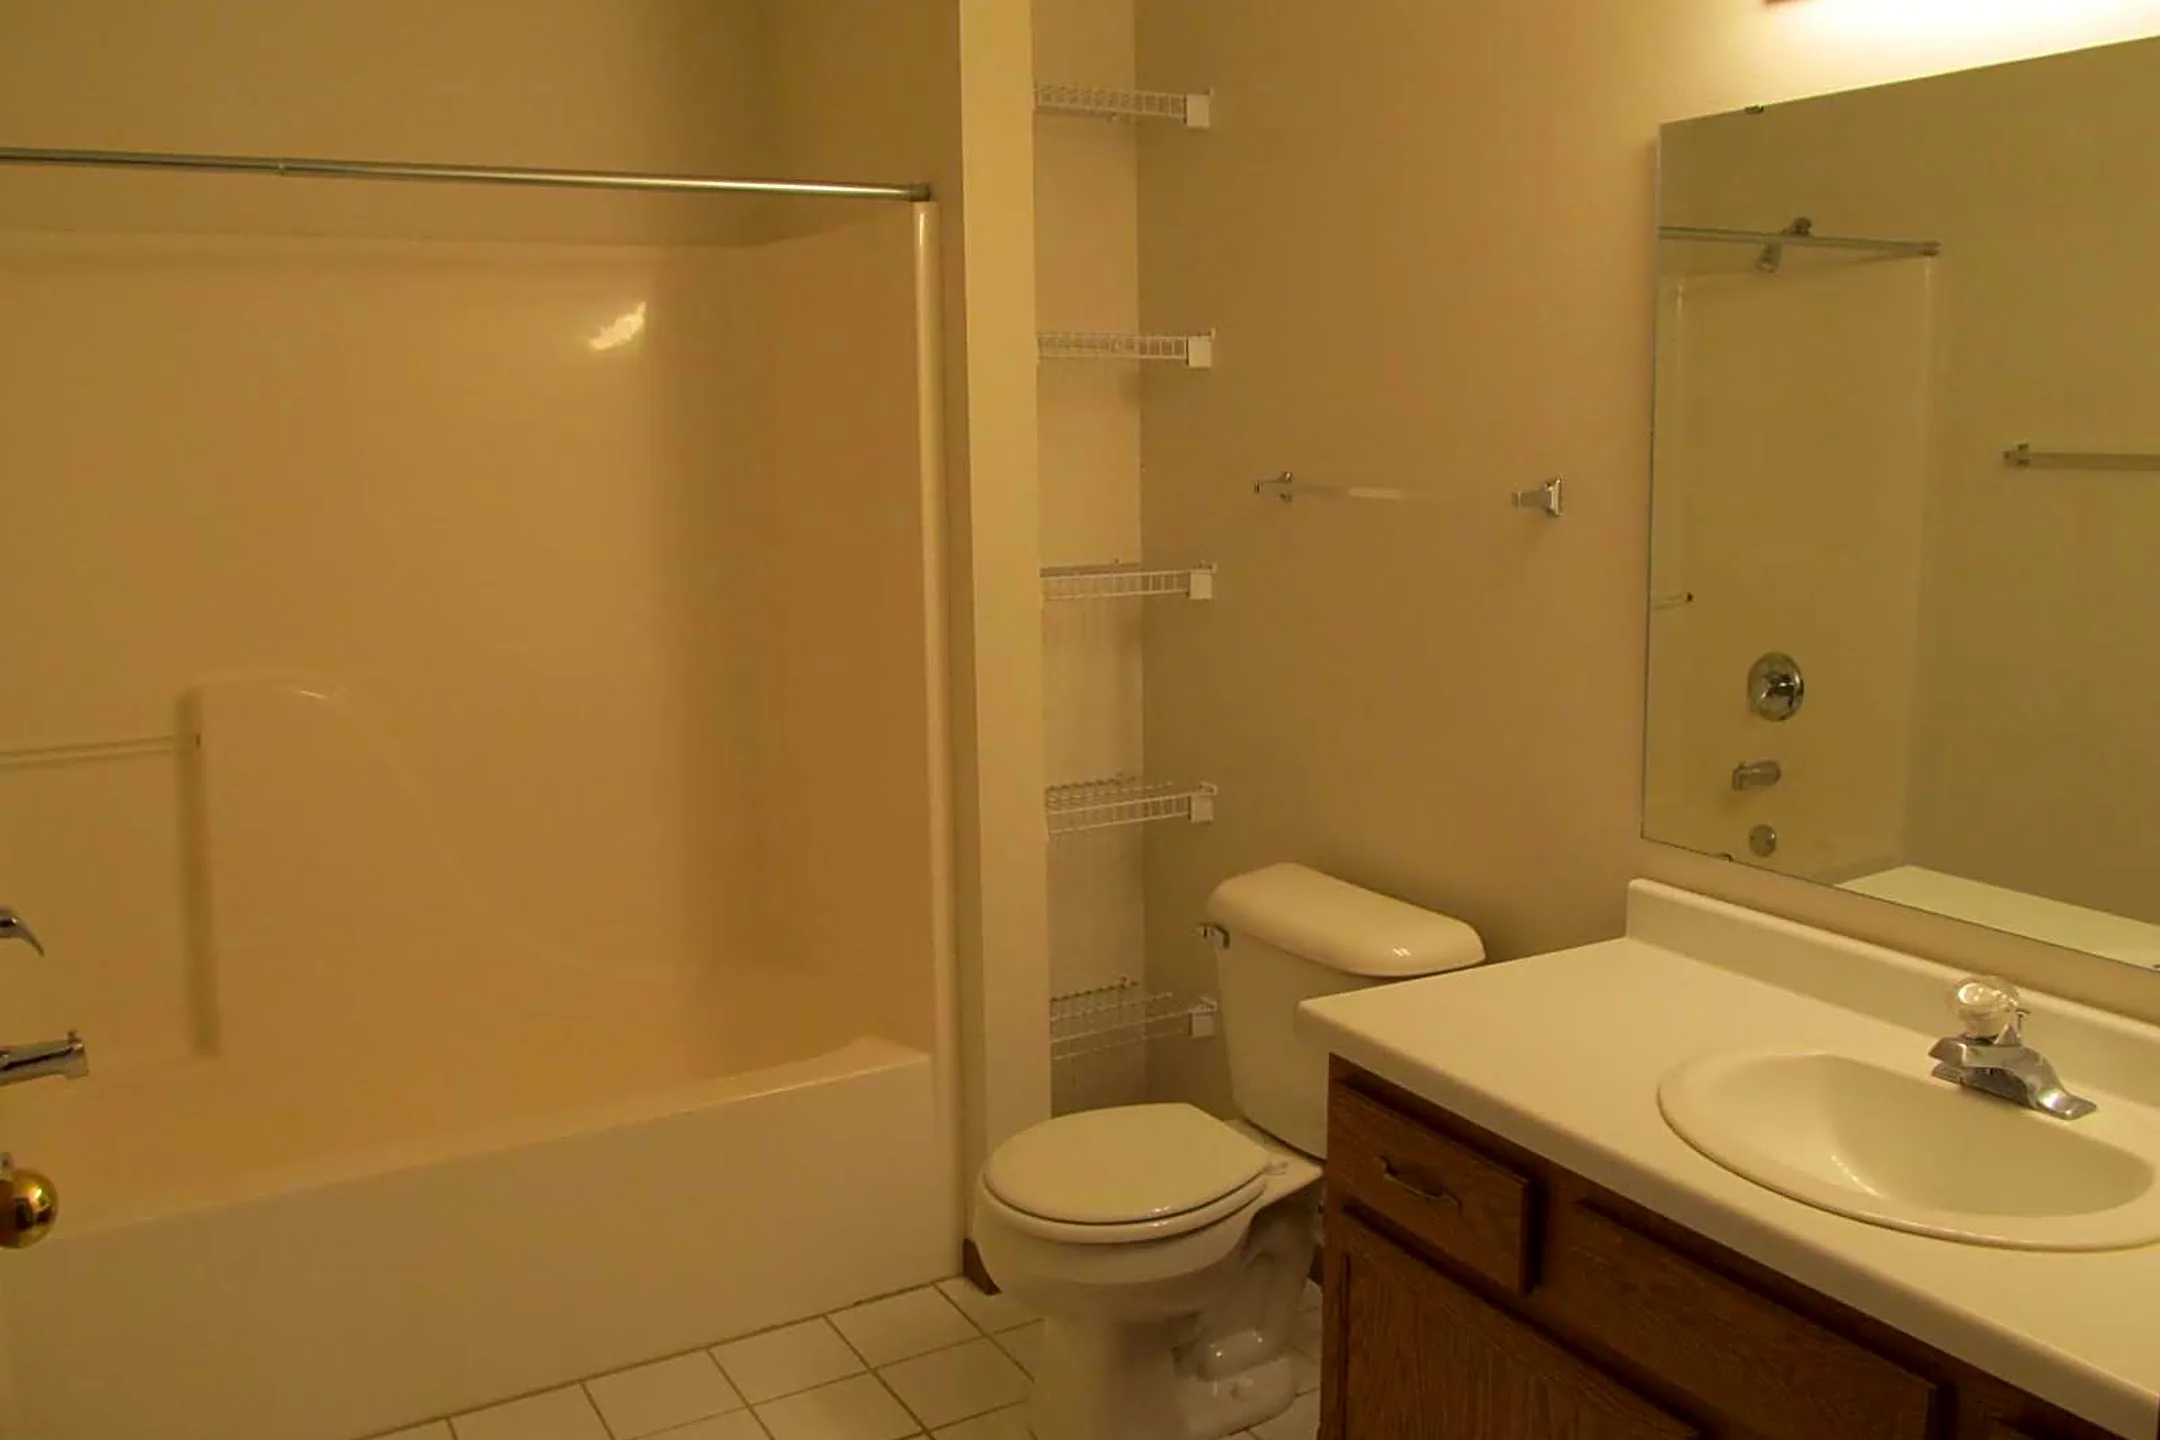 Bathroom - Sun West I & II Apartment Homes - Fargo, ND